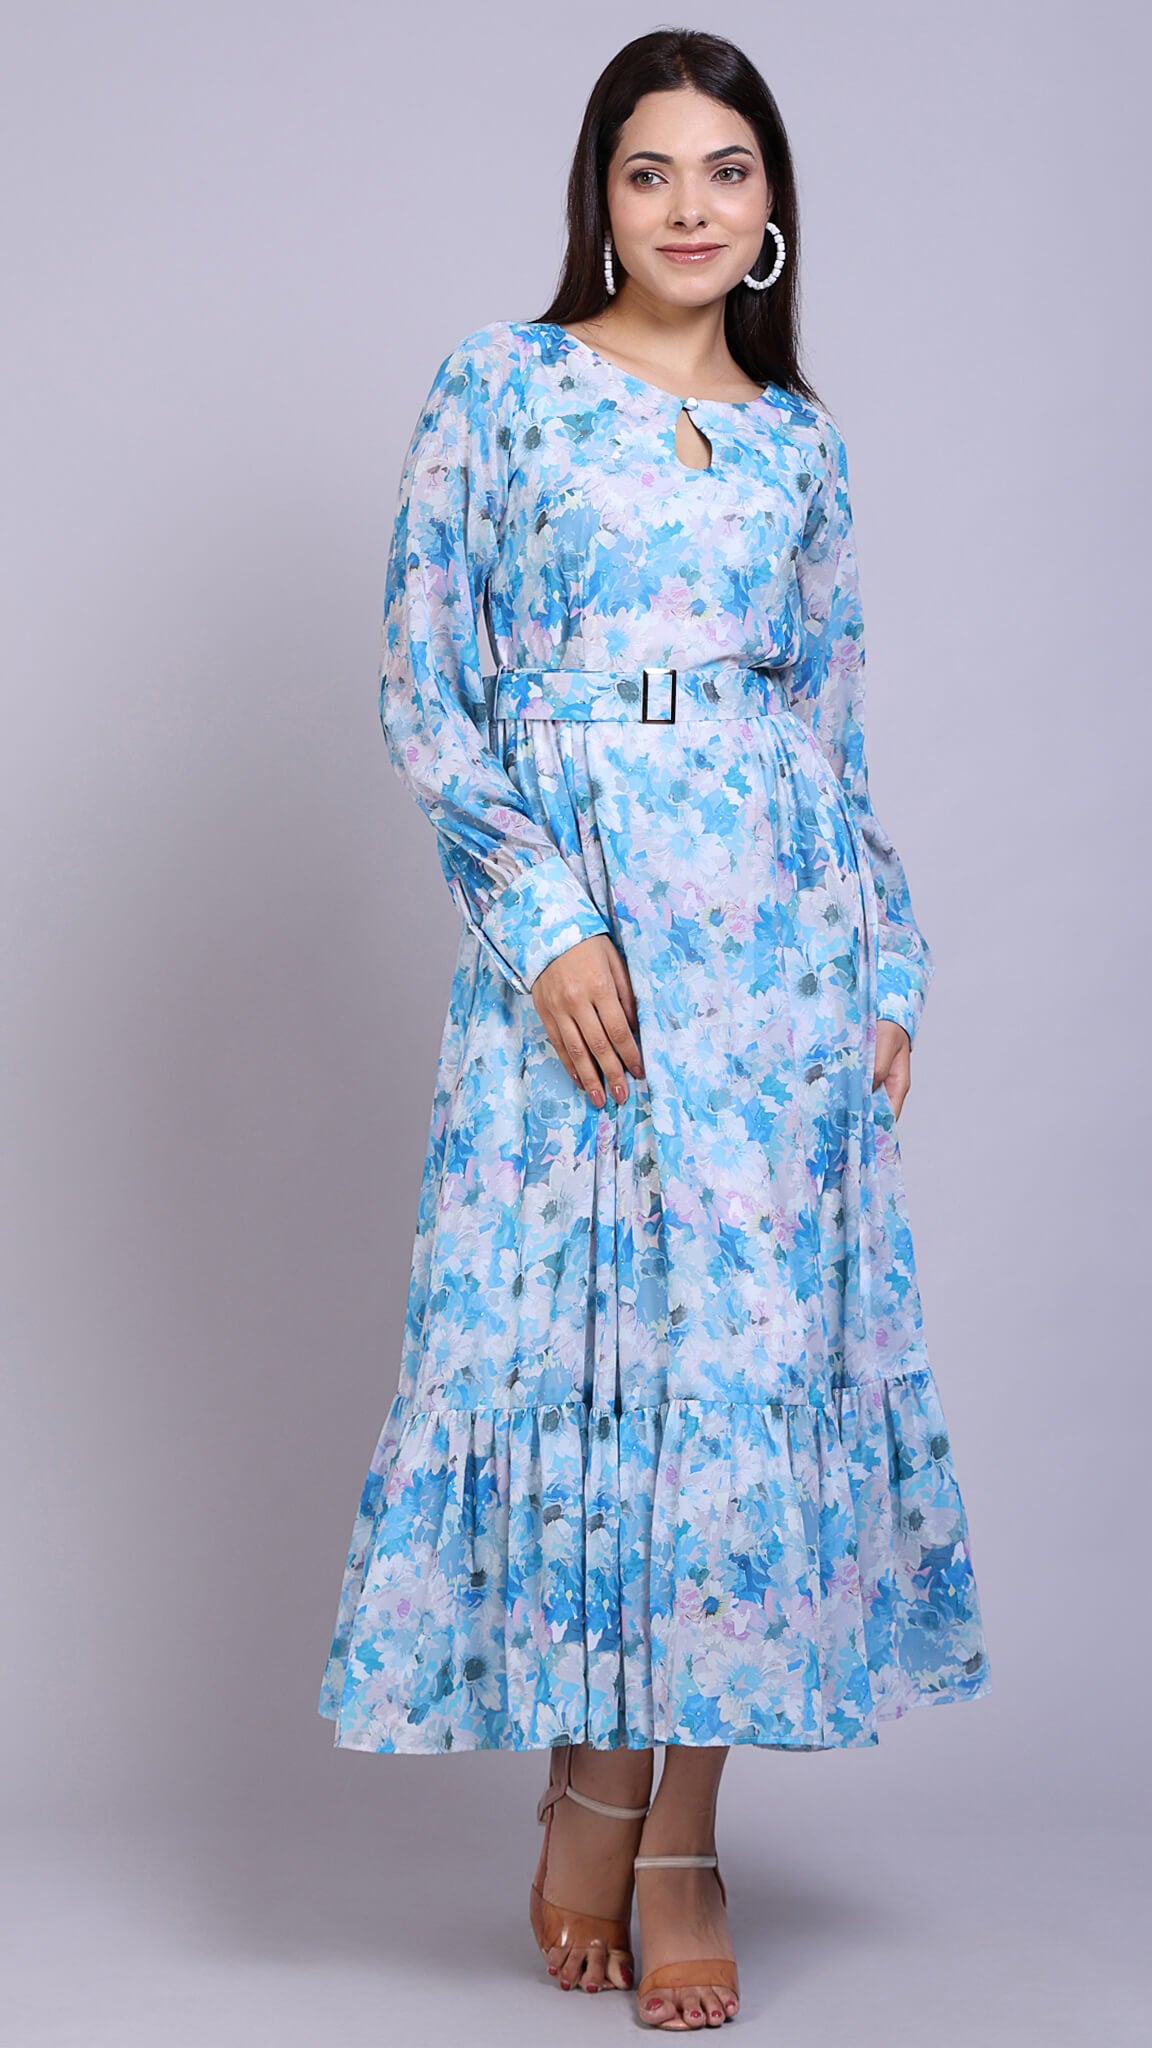 Summer Women's Vintage Printed Bohemian Dress - Stay Cool & Elegant |  Linions